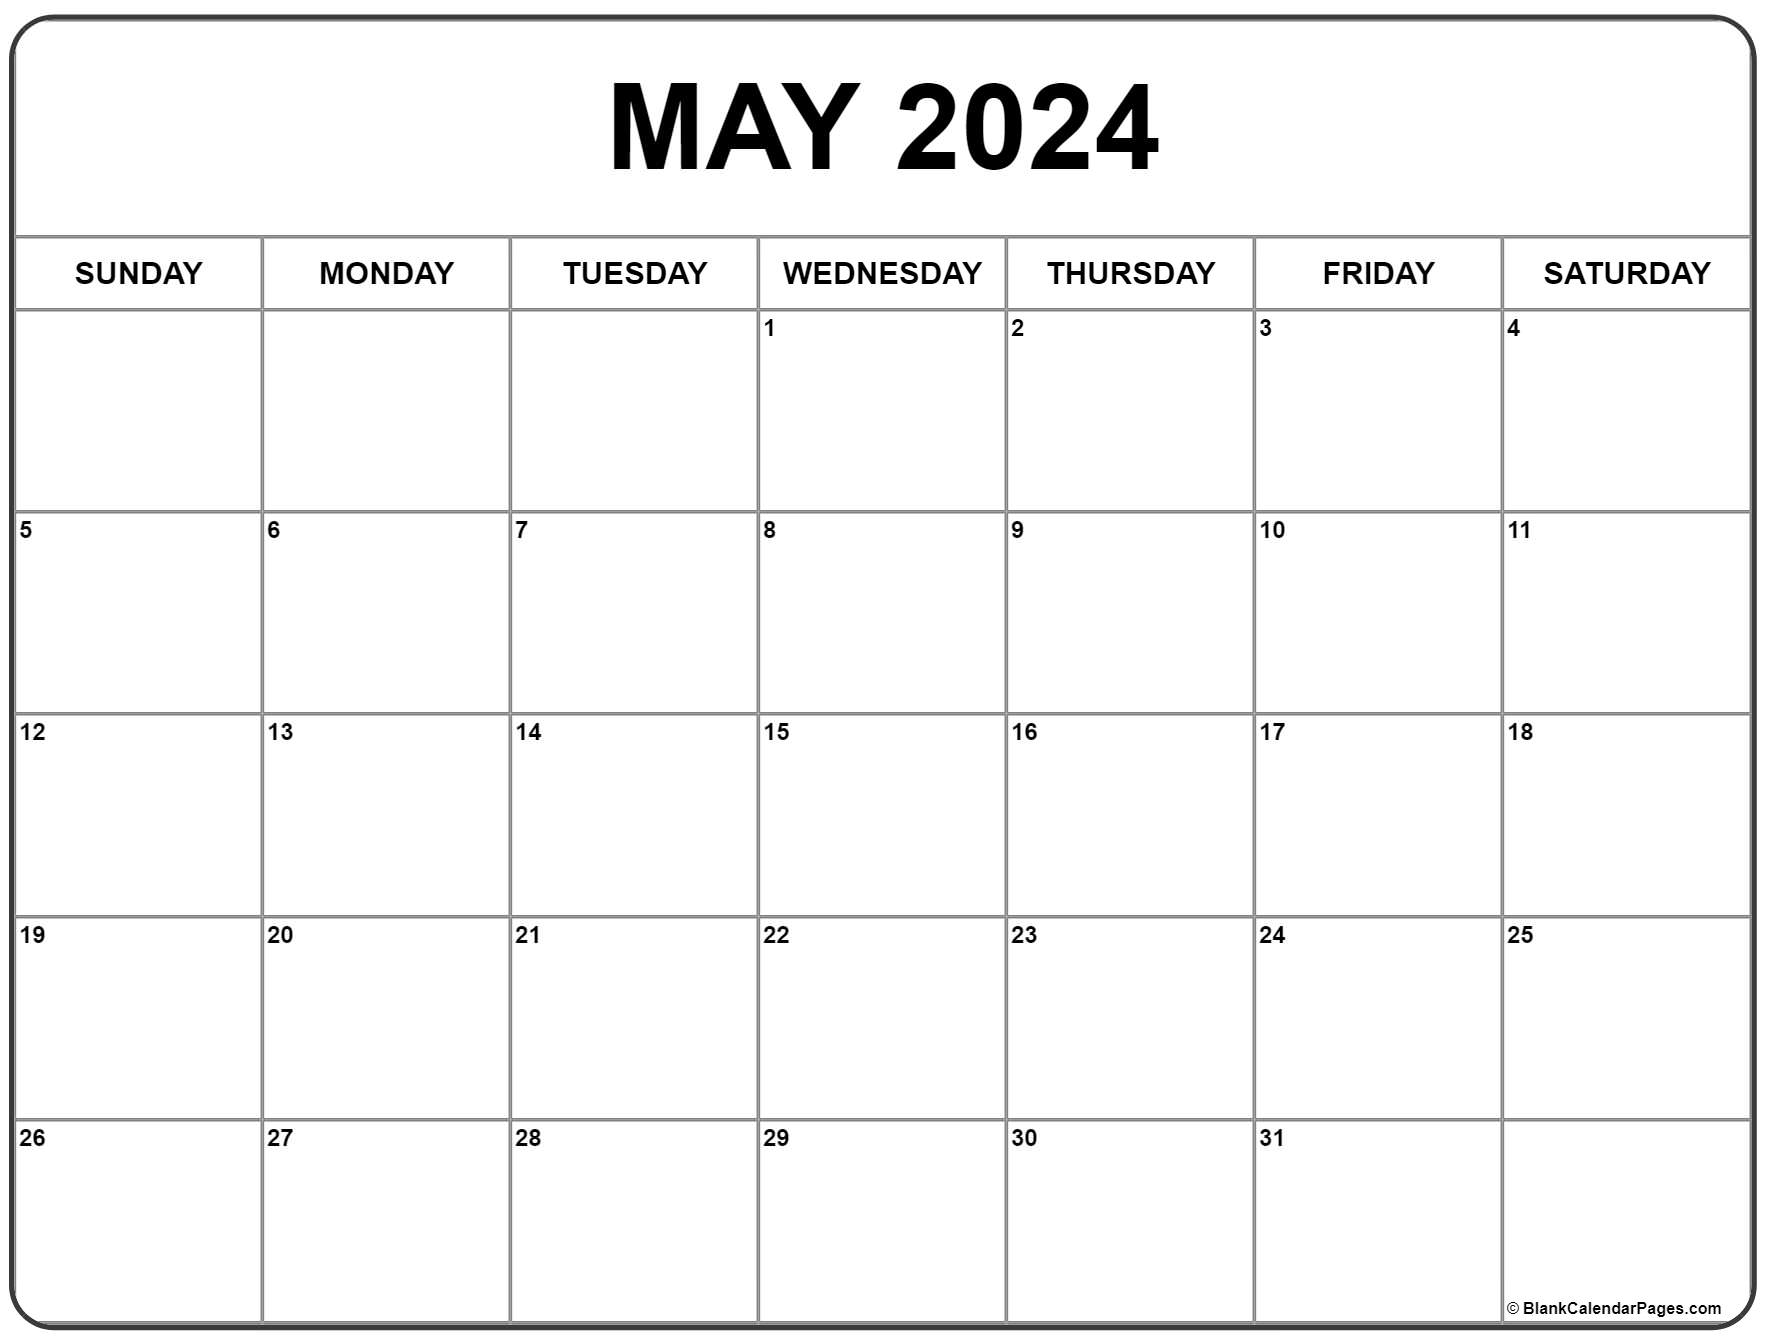 May 2024 Calendar | Free Printable Calendar for Free May 2024 Printable Calendar